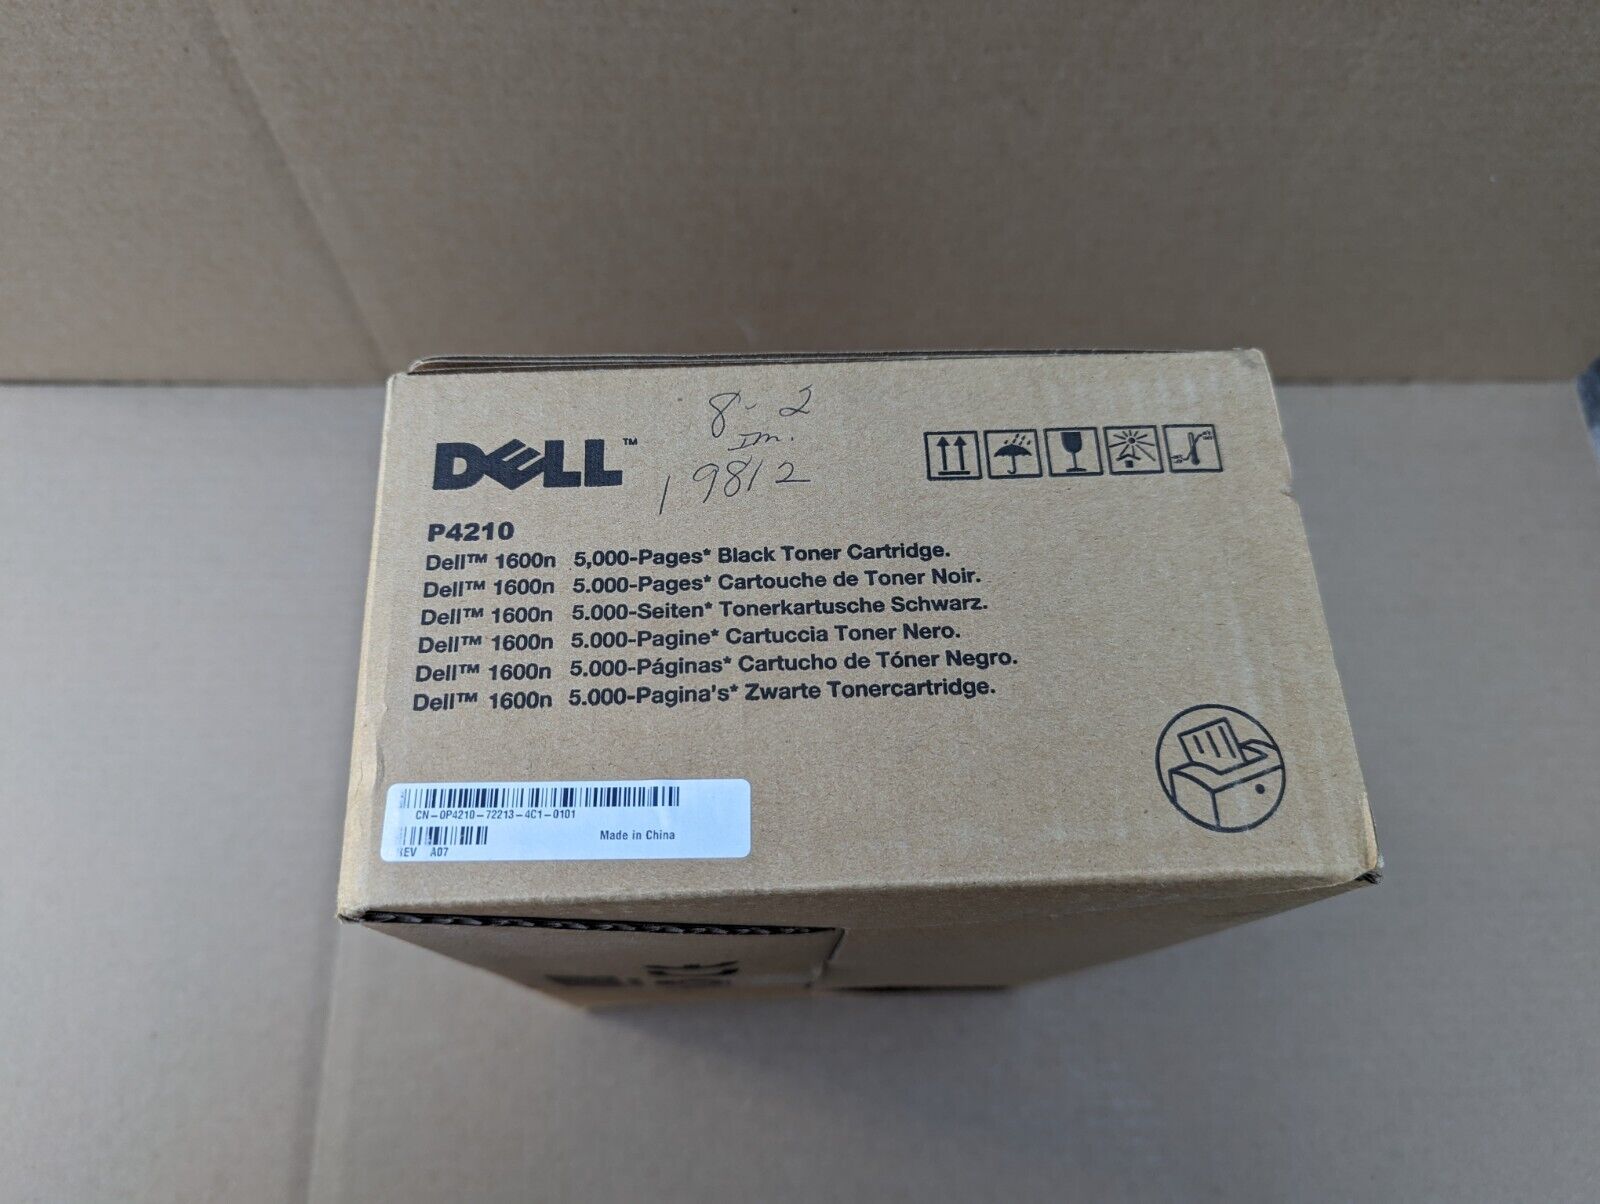 Dell P4210 High Yield Black Toner Cartridge Genuine OEM for 1600n Printer